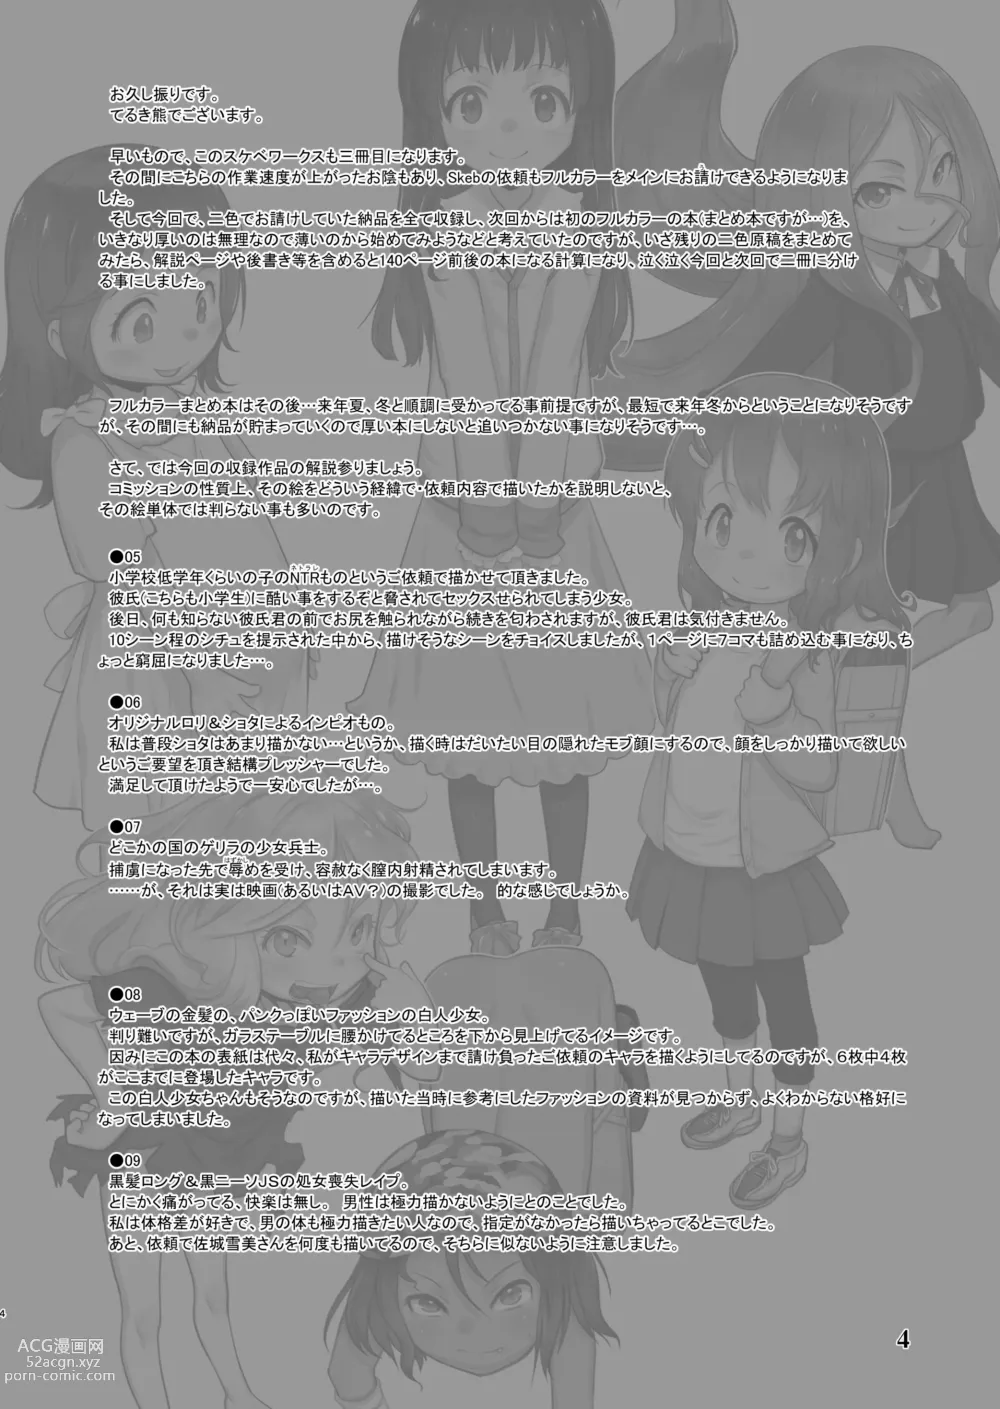 Page 4 of doujinshi Skeb-e Works 03